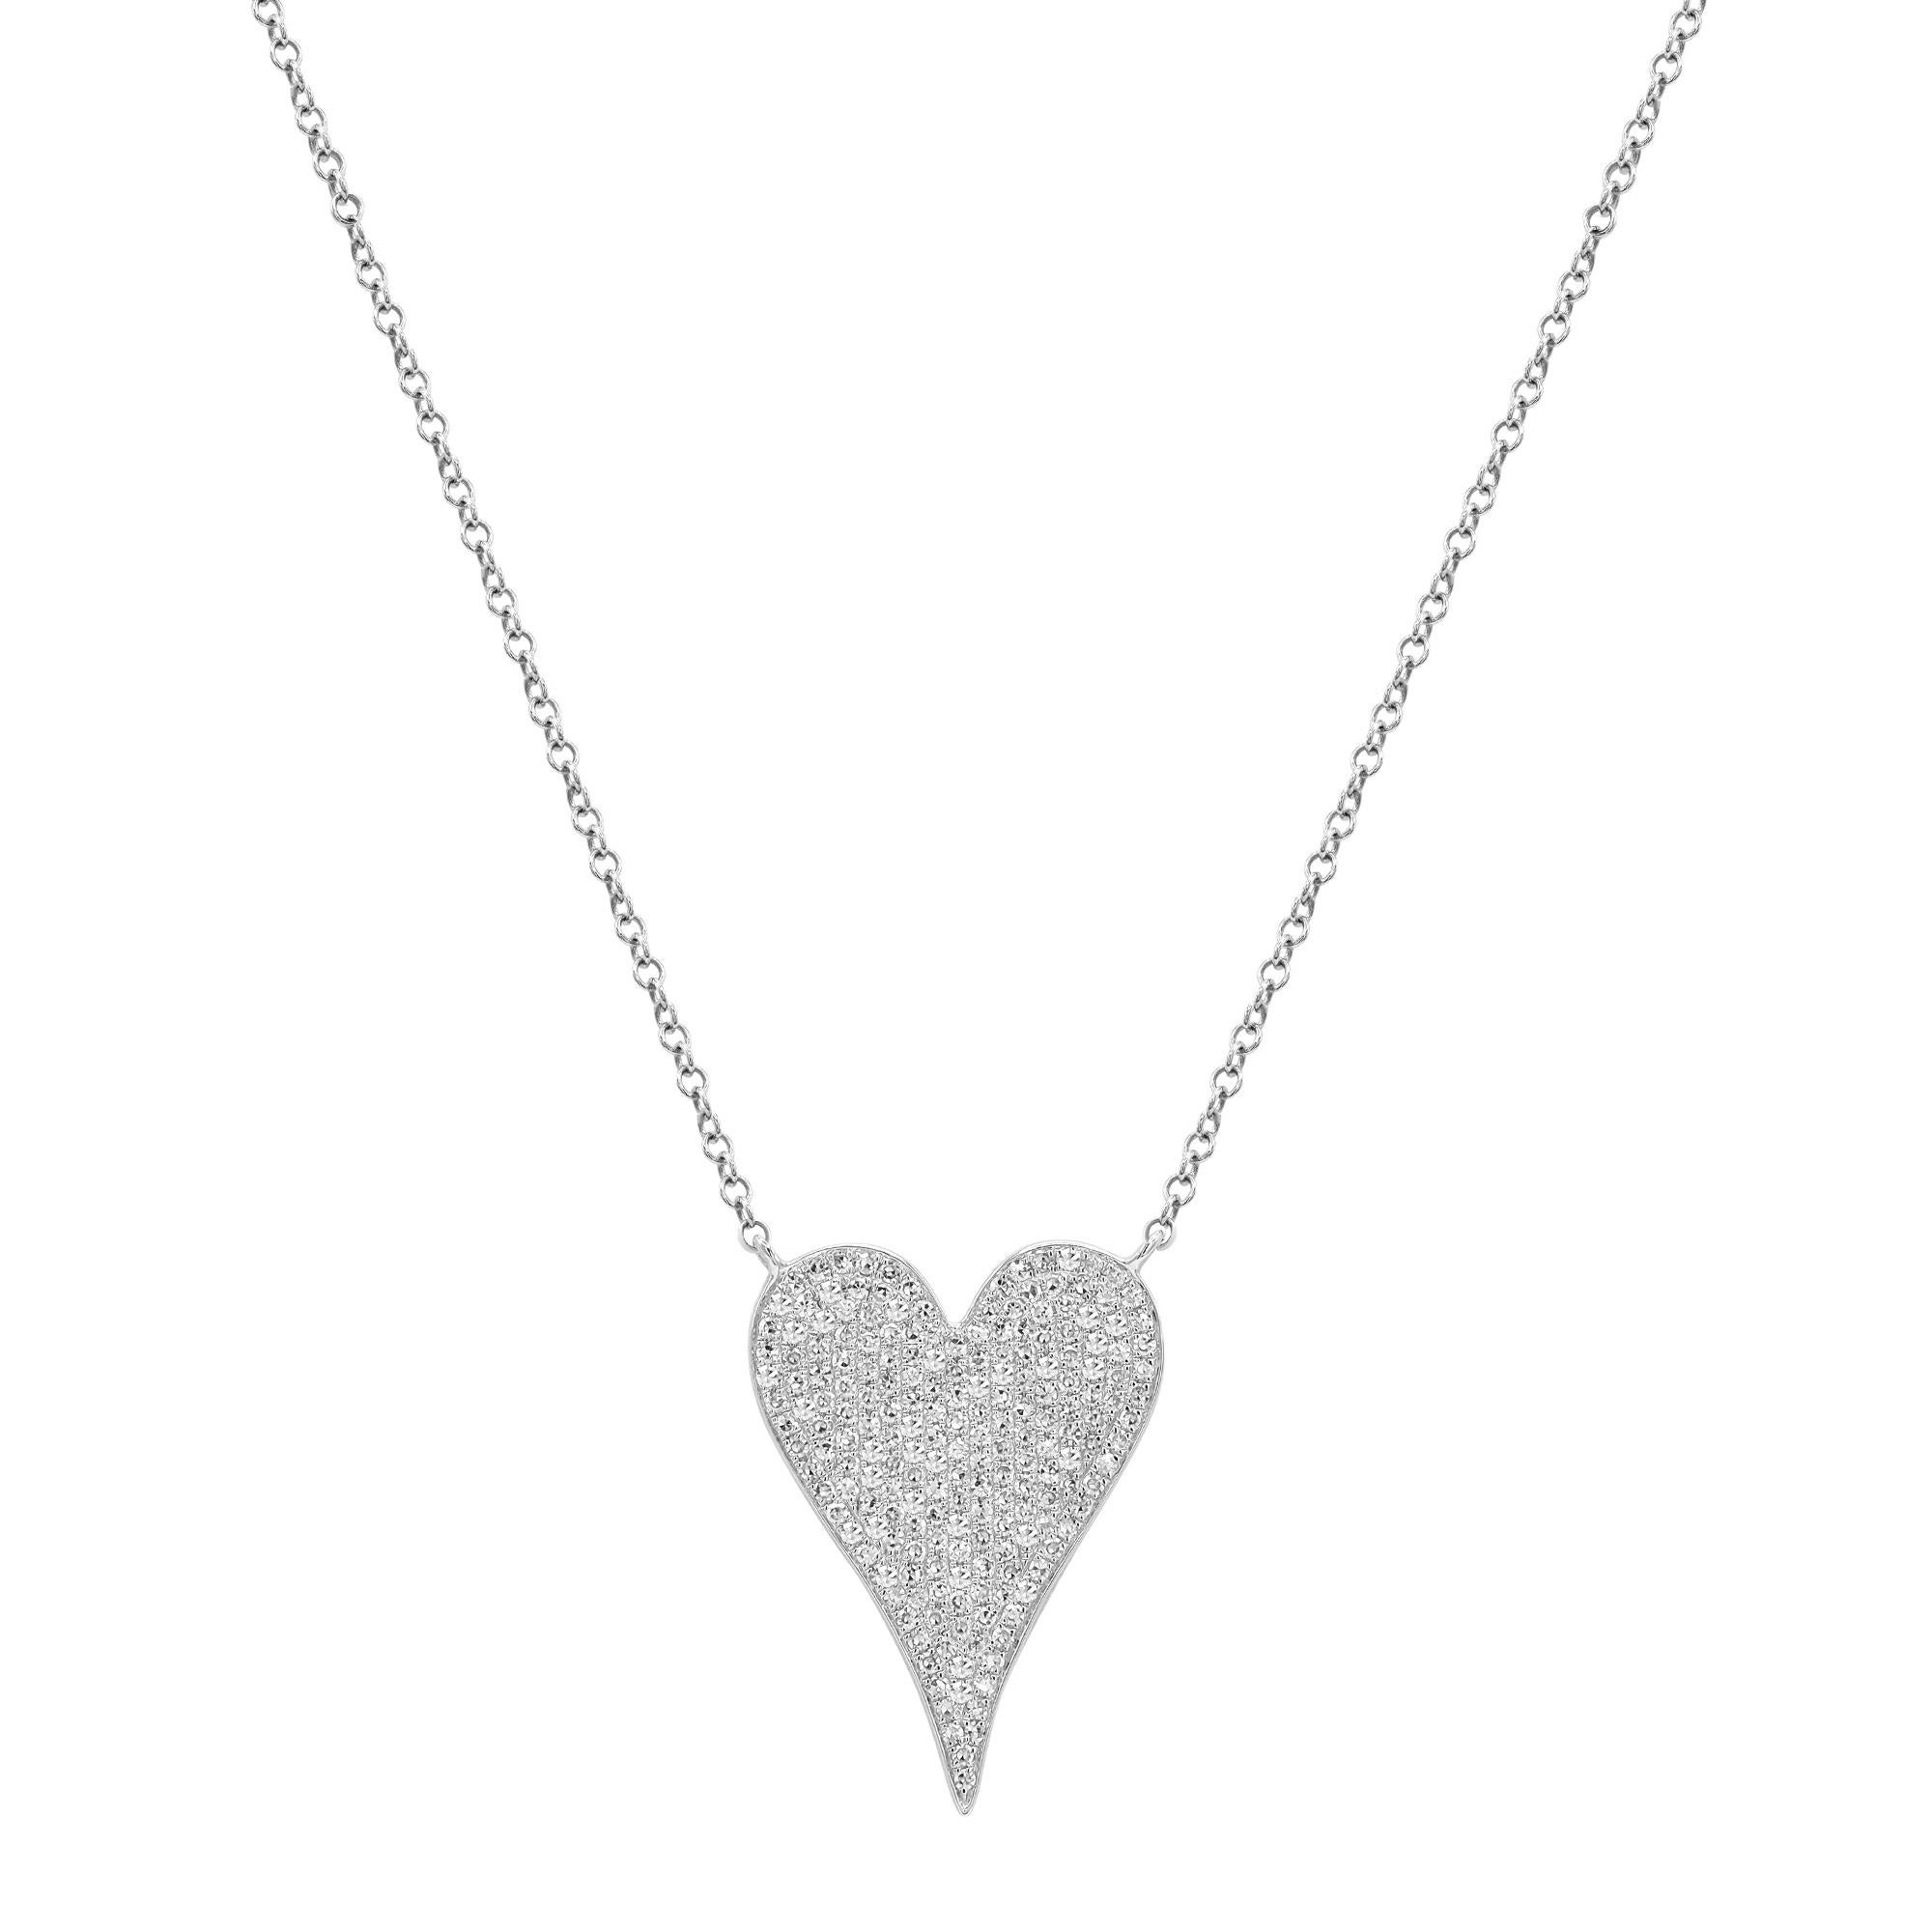 Modern Rachel Koen Pave Diamond Heart Pendant Necklace 14K White Gold 0.21Cttw For Sale